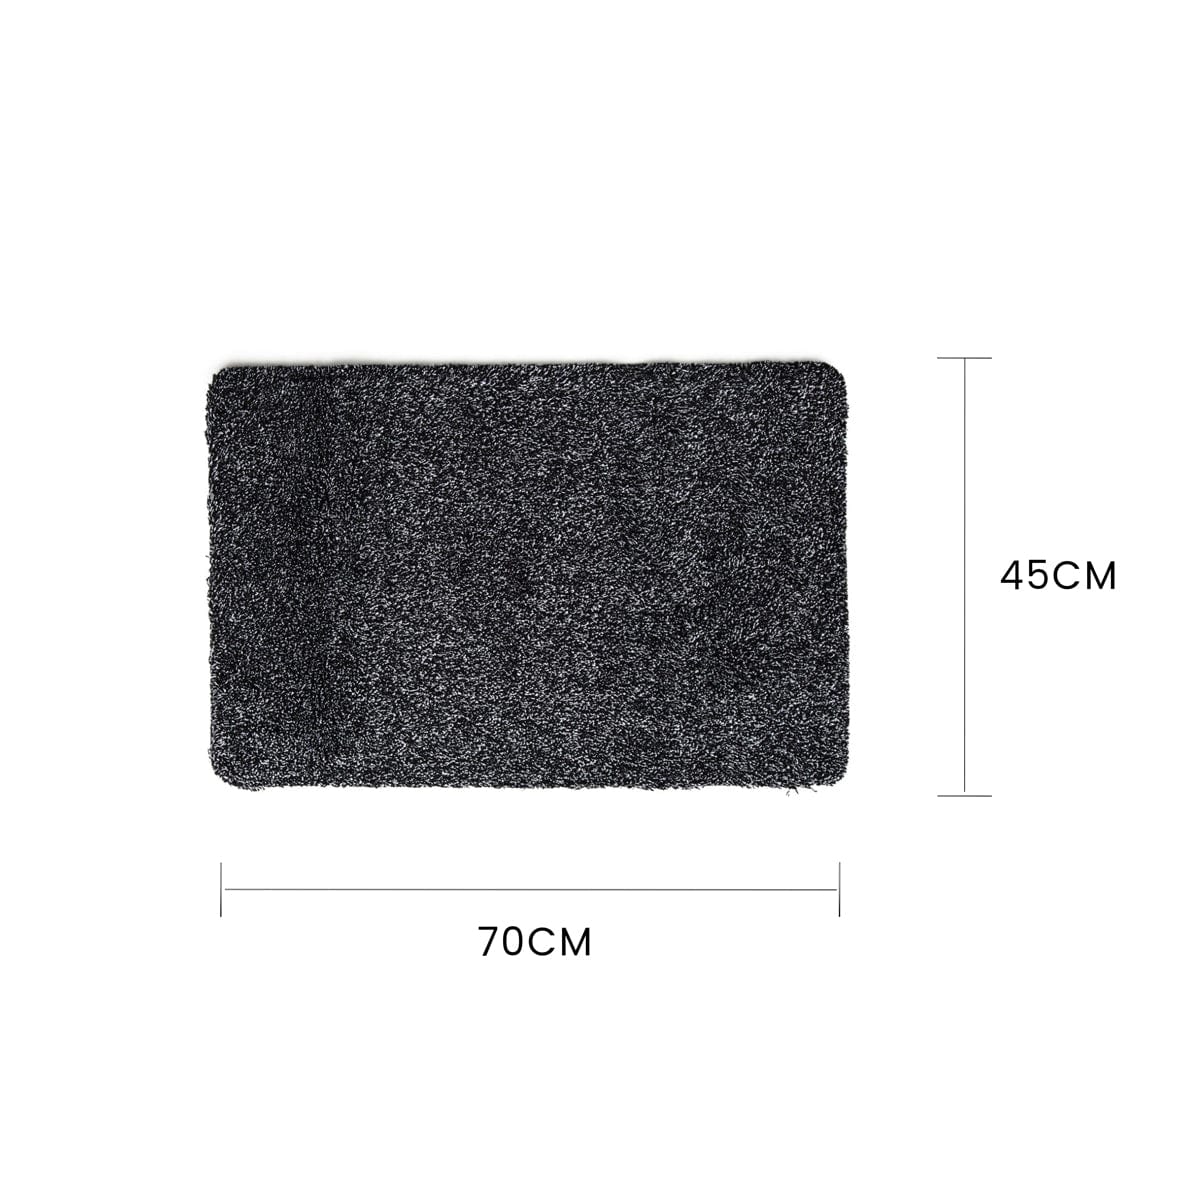 Living Today 2 x Super Absorbent Microfibre Doormat Non Slip Heavy Duty Dirt/Mud Rug Floor Carpet